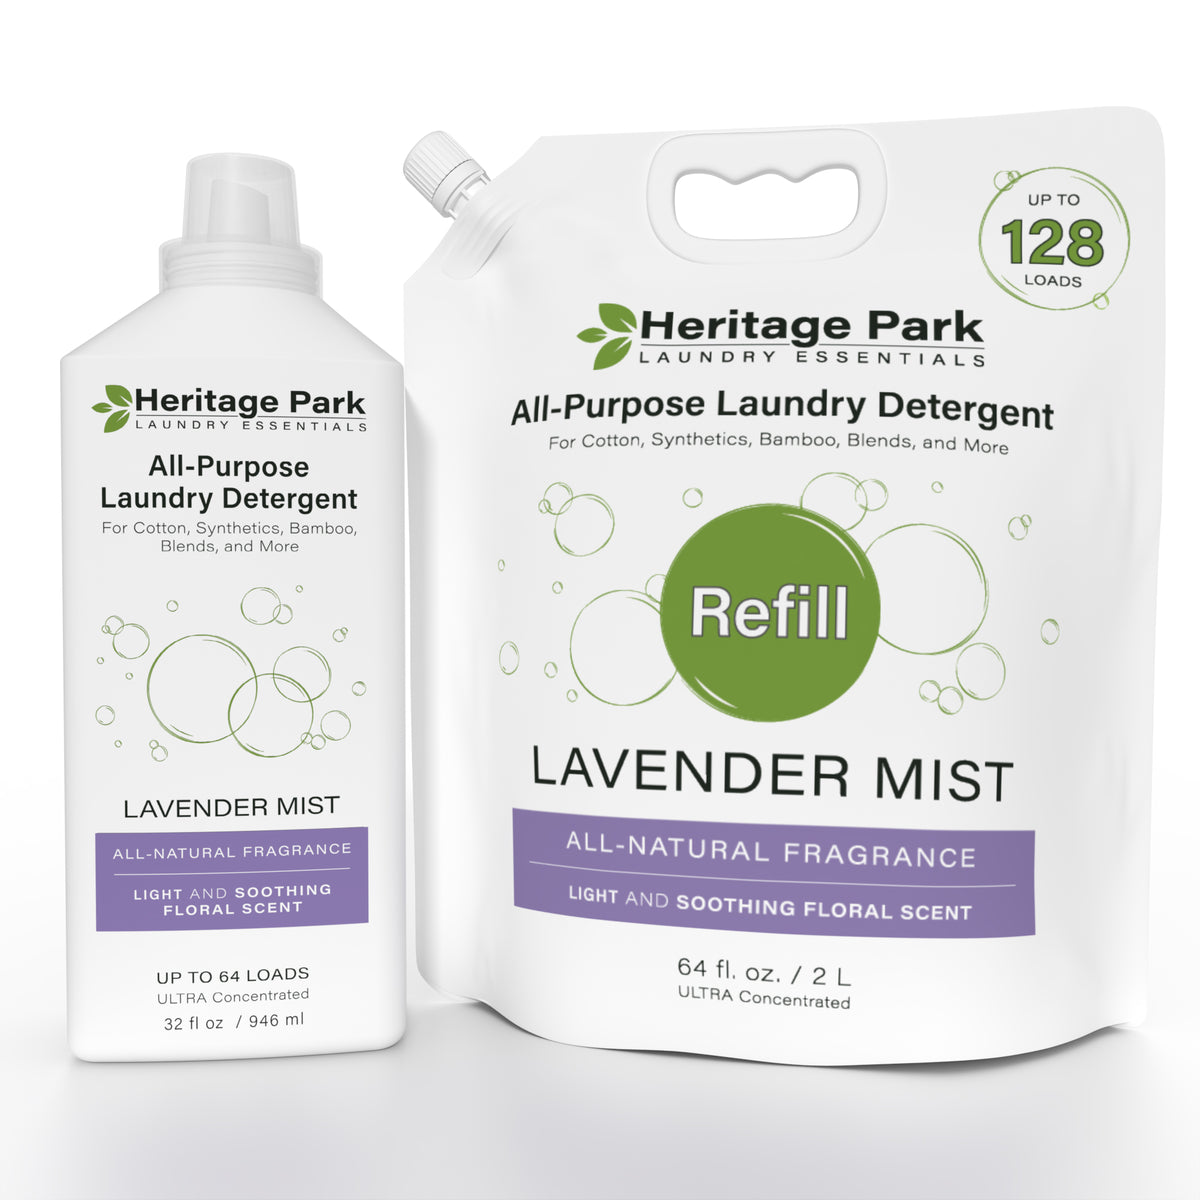 Heritage Park All-Purpose Luxury Laundry Detergent - Lavender Mist